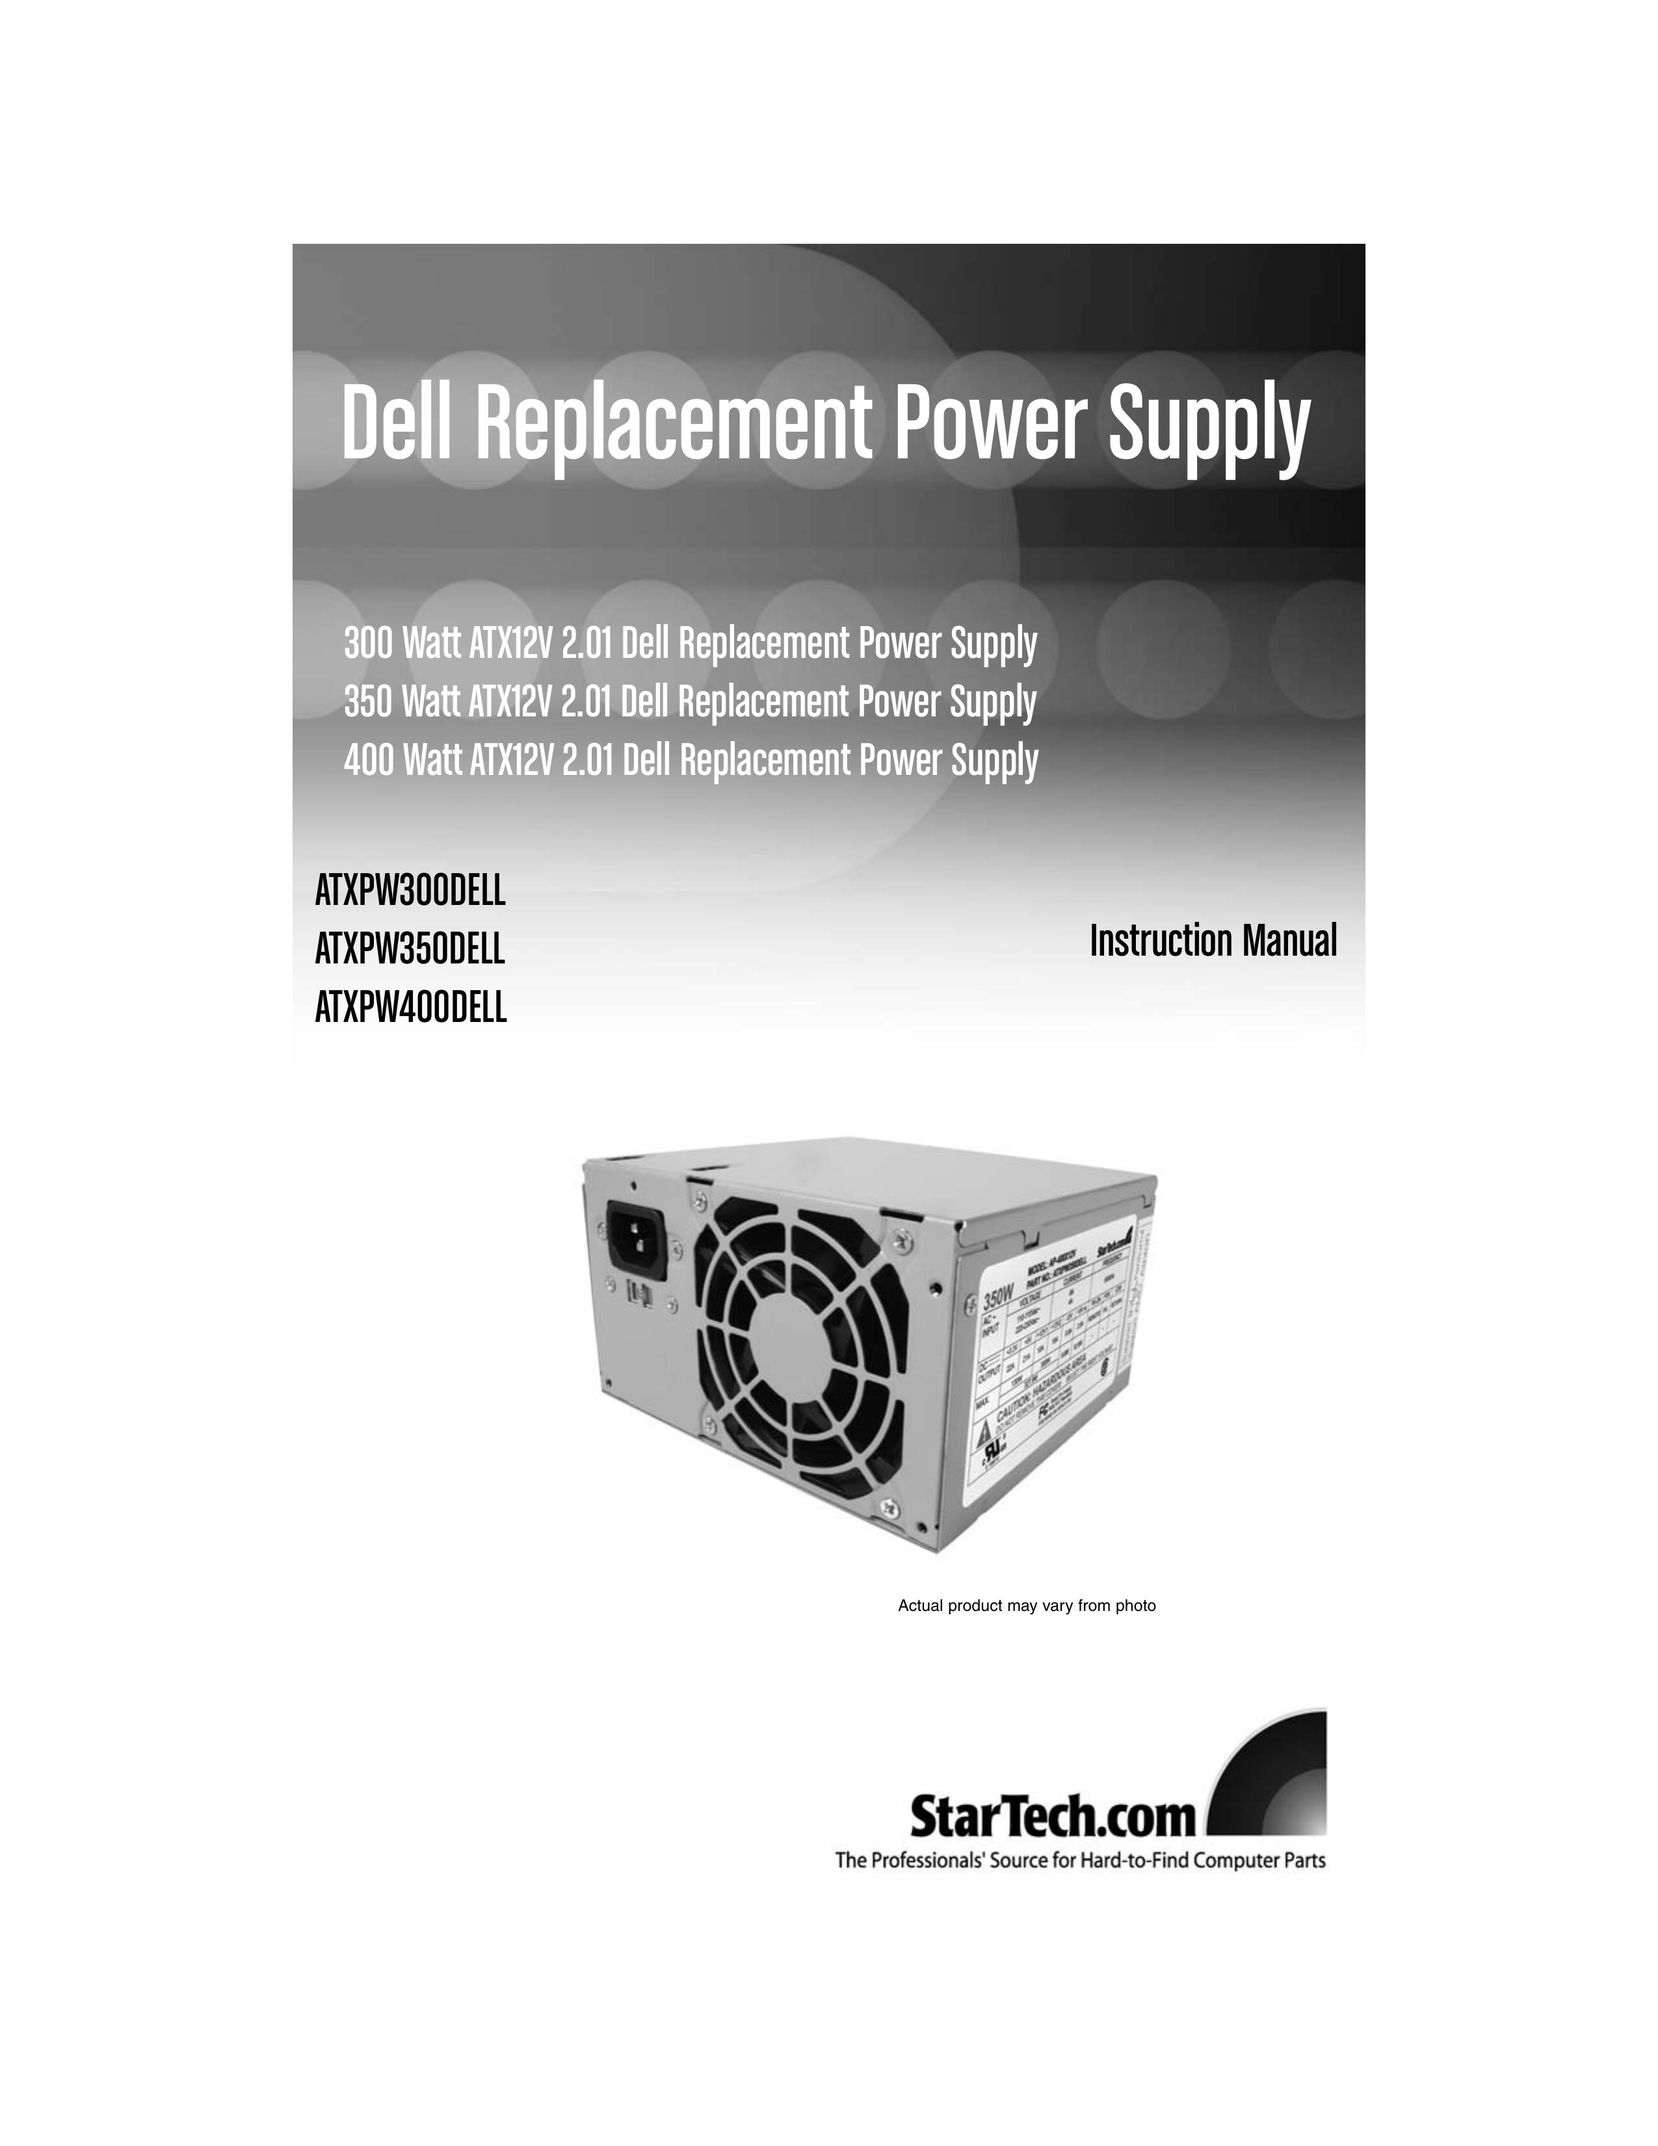 StarTech.com ATXPW400DELL Power Supply User Manual